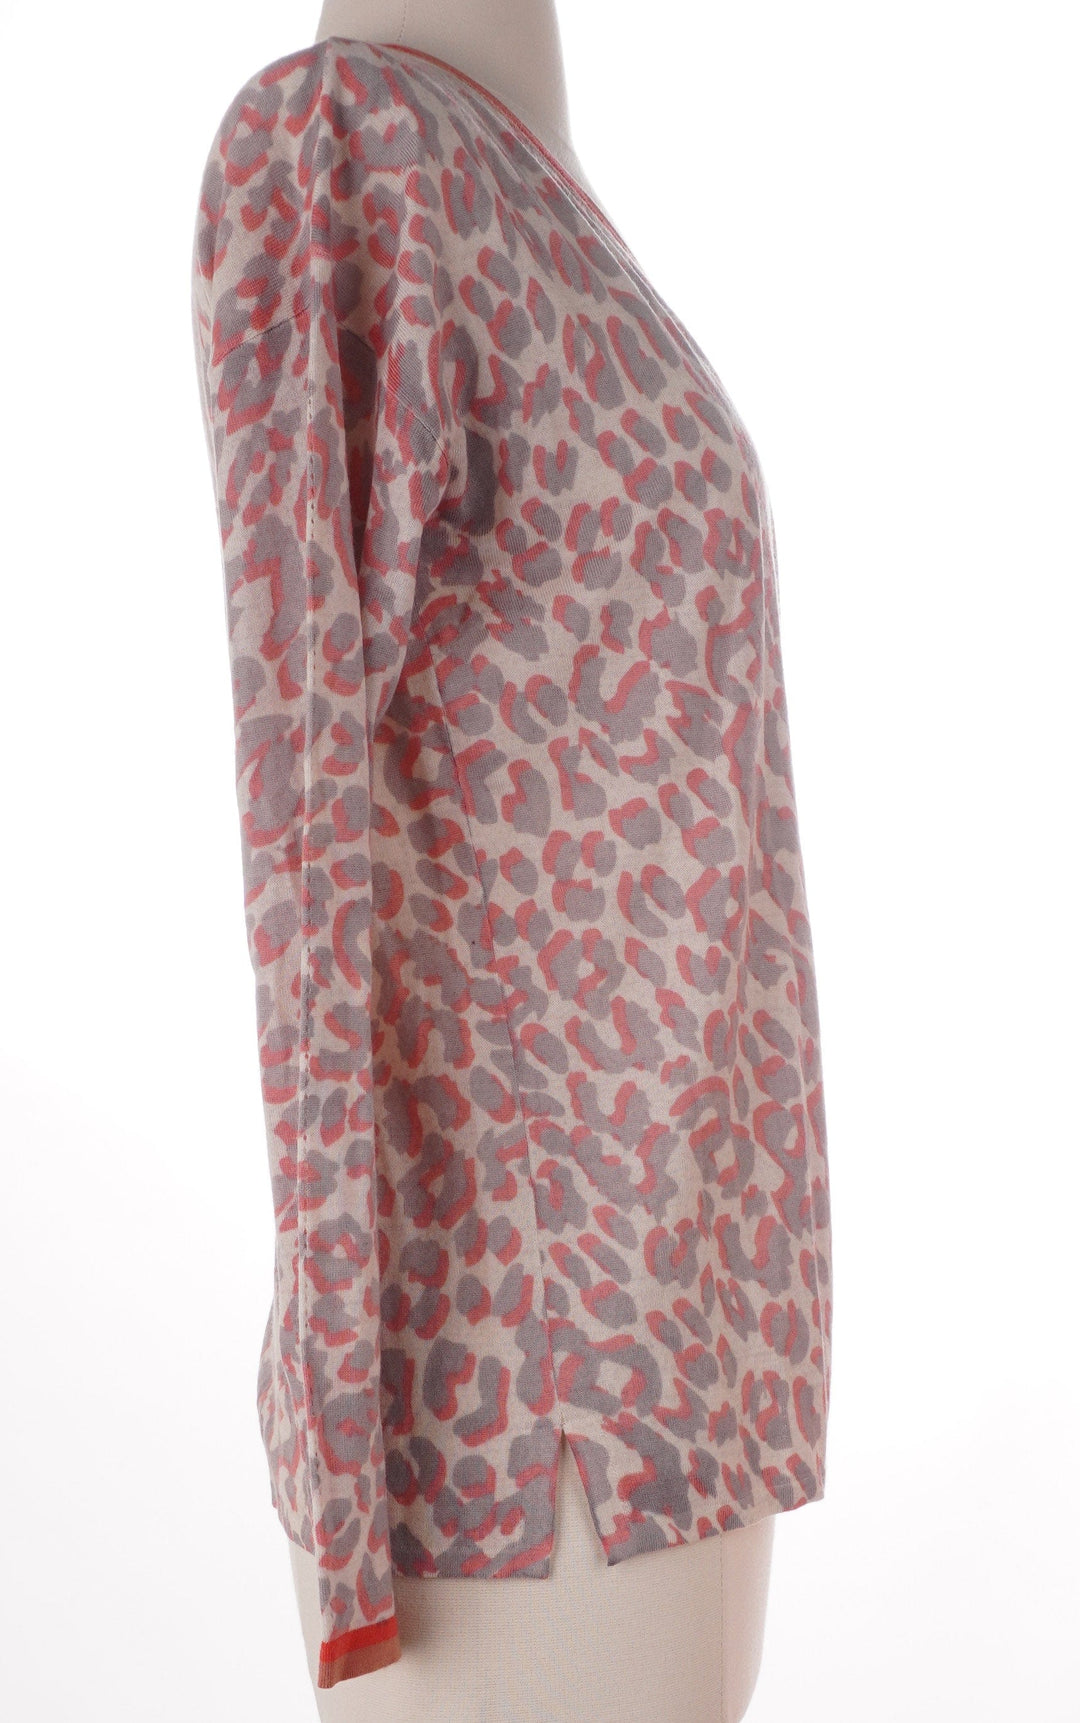 Bogner Grey / Large / Consigned Bogner Rena Cheetah Sweater - Grey/Pink - Size Medium